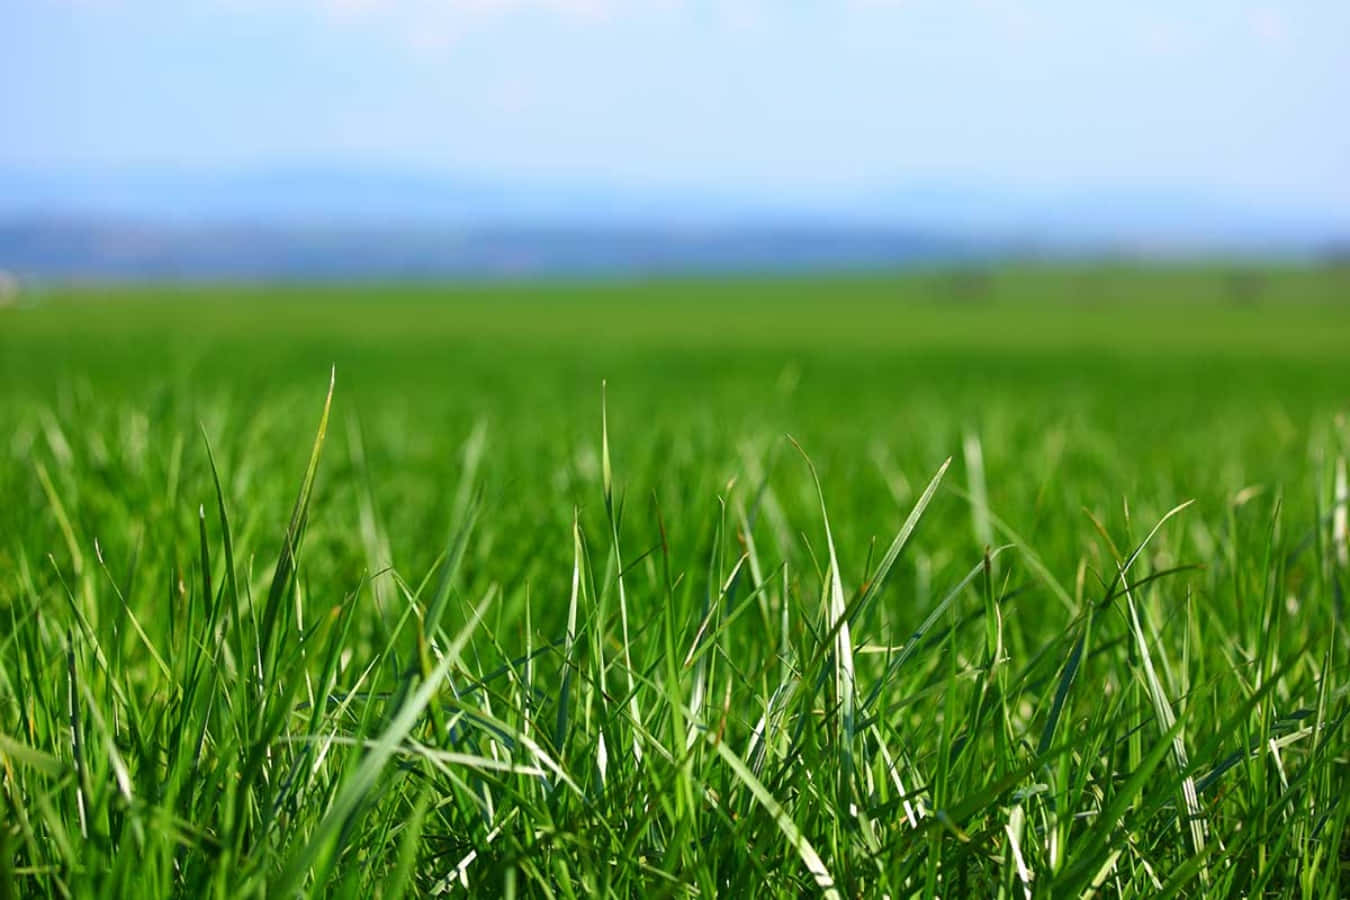 A close-up of a beautiful, lush green grass field